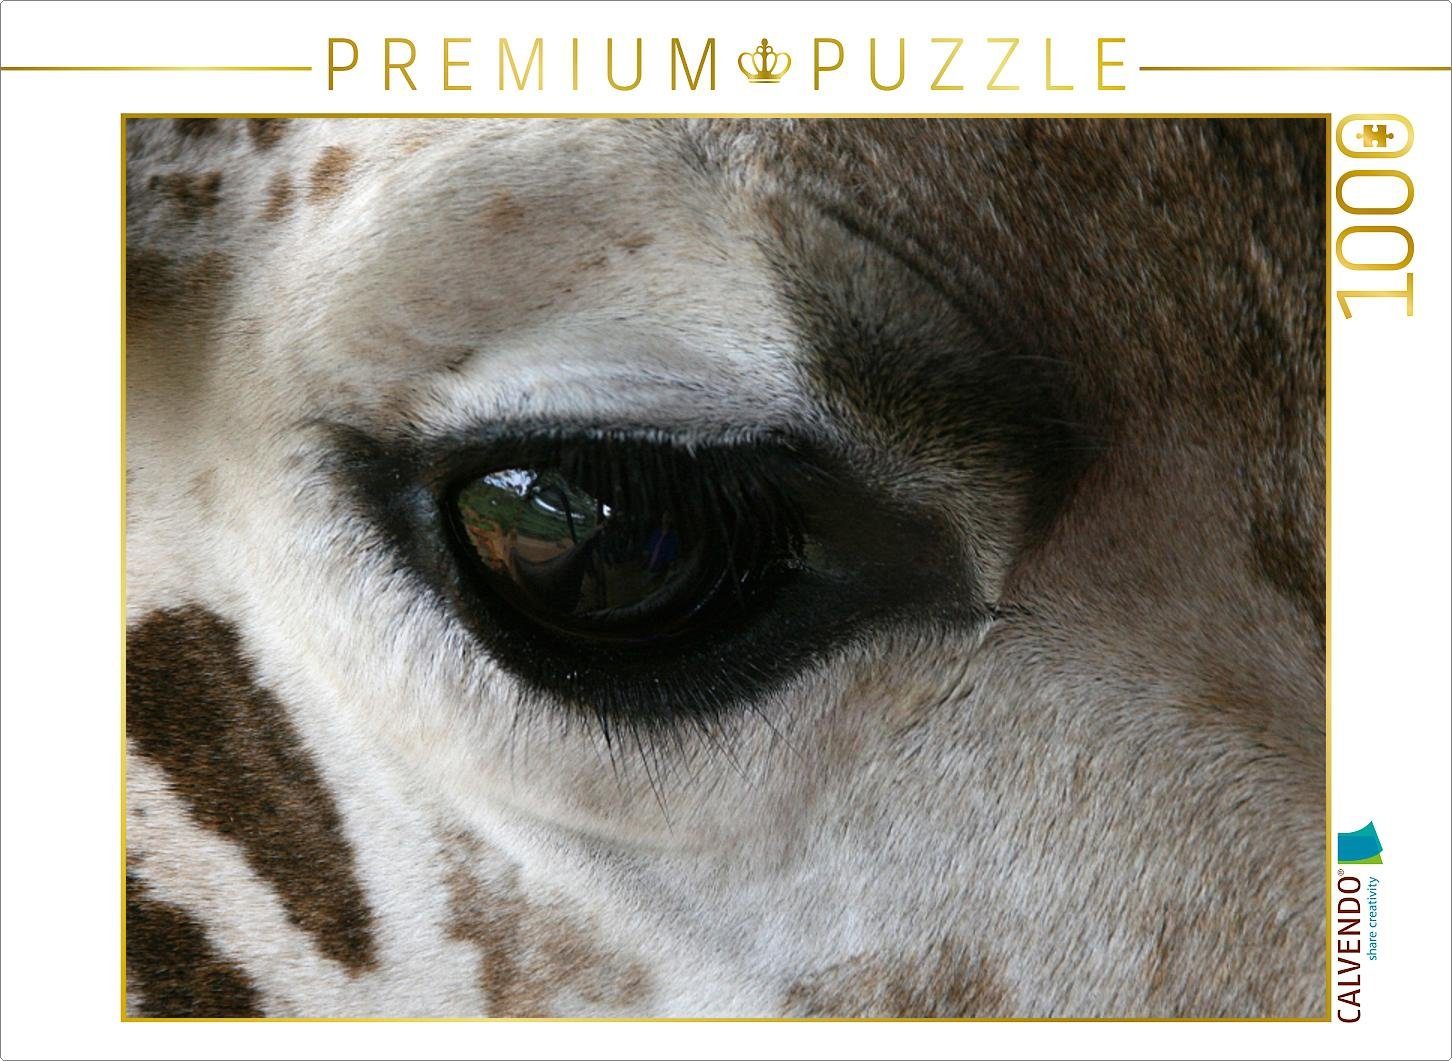 CALVENDO Puzzle CALVENDO Puzzle Giraffen – Augen-Blick 1000 Teile Lege-Größe 64 x 48 cm Foto-Puzzle Bild von Michael Herzog, 1000 Puzzleteile